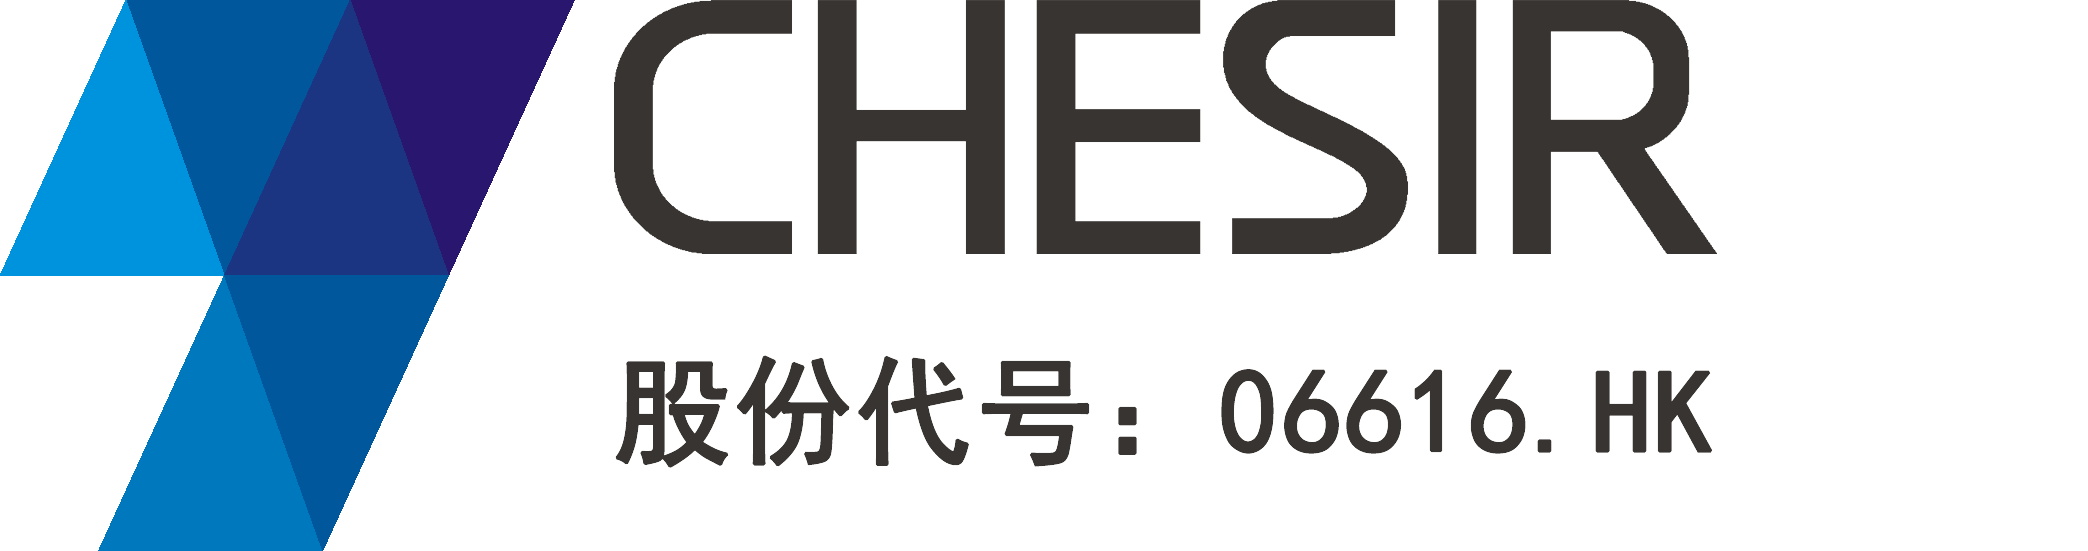 Guangxi Chesir Pearl Material Co., Ltd._logo